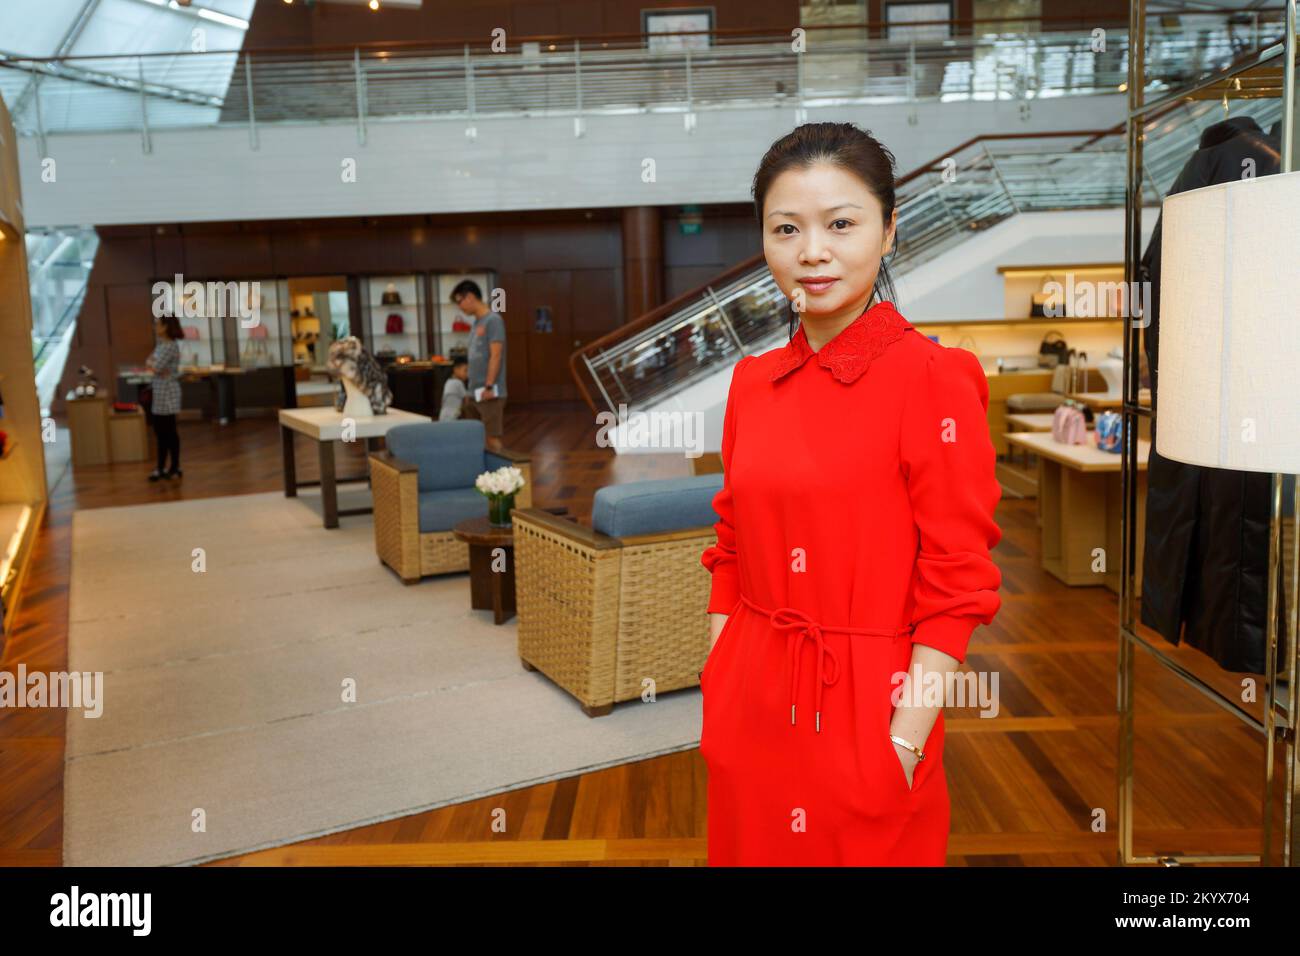 Singapore June 19 2019 Louis Vuitton Stock Photo 1440296105